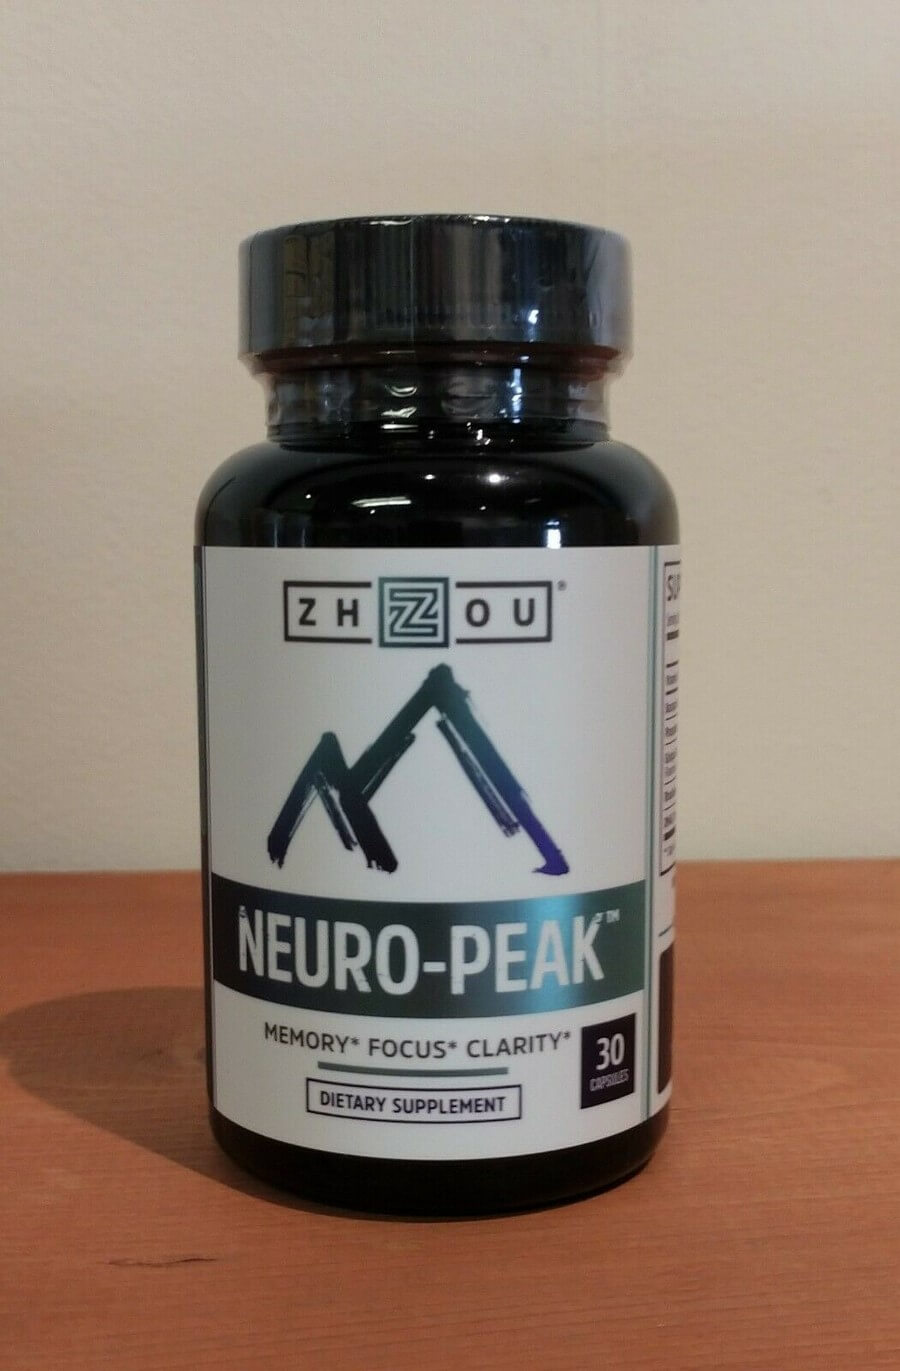 Neuro Peak bottle